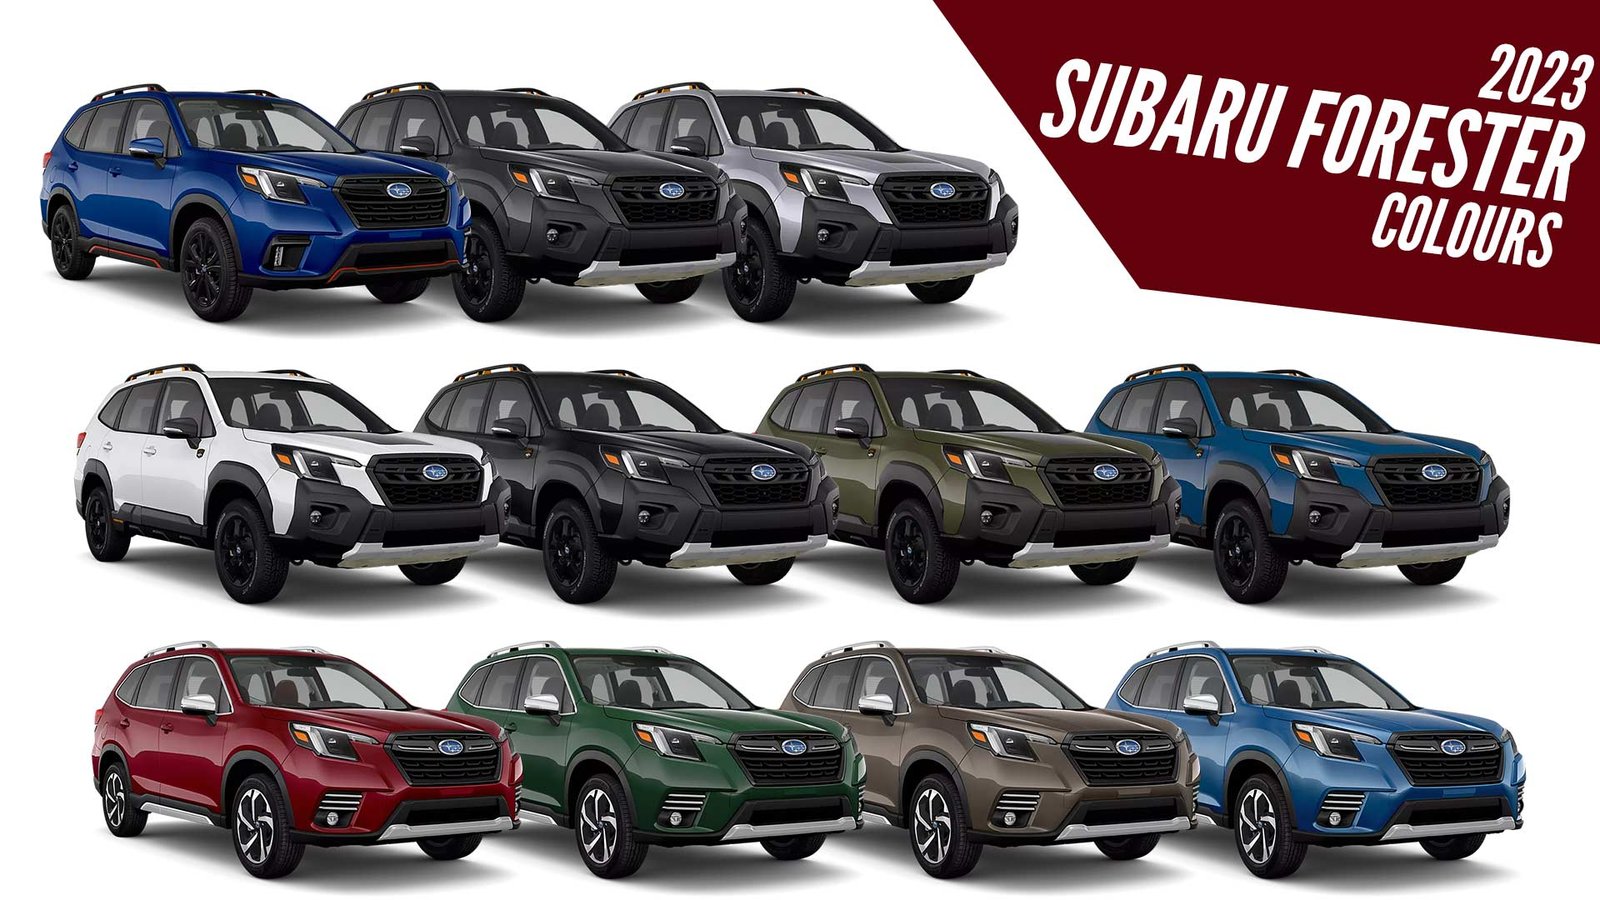 2023 Subaru Forester All Color Options Images AUTOBICS